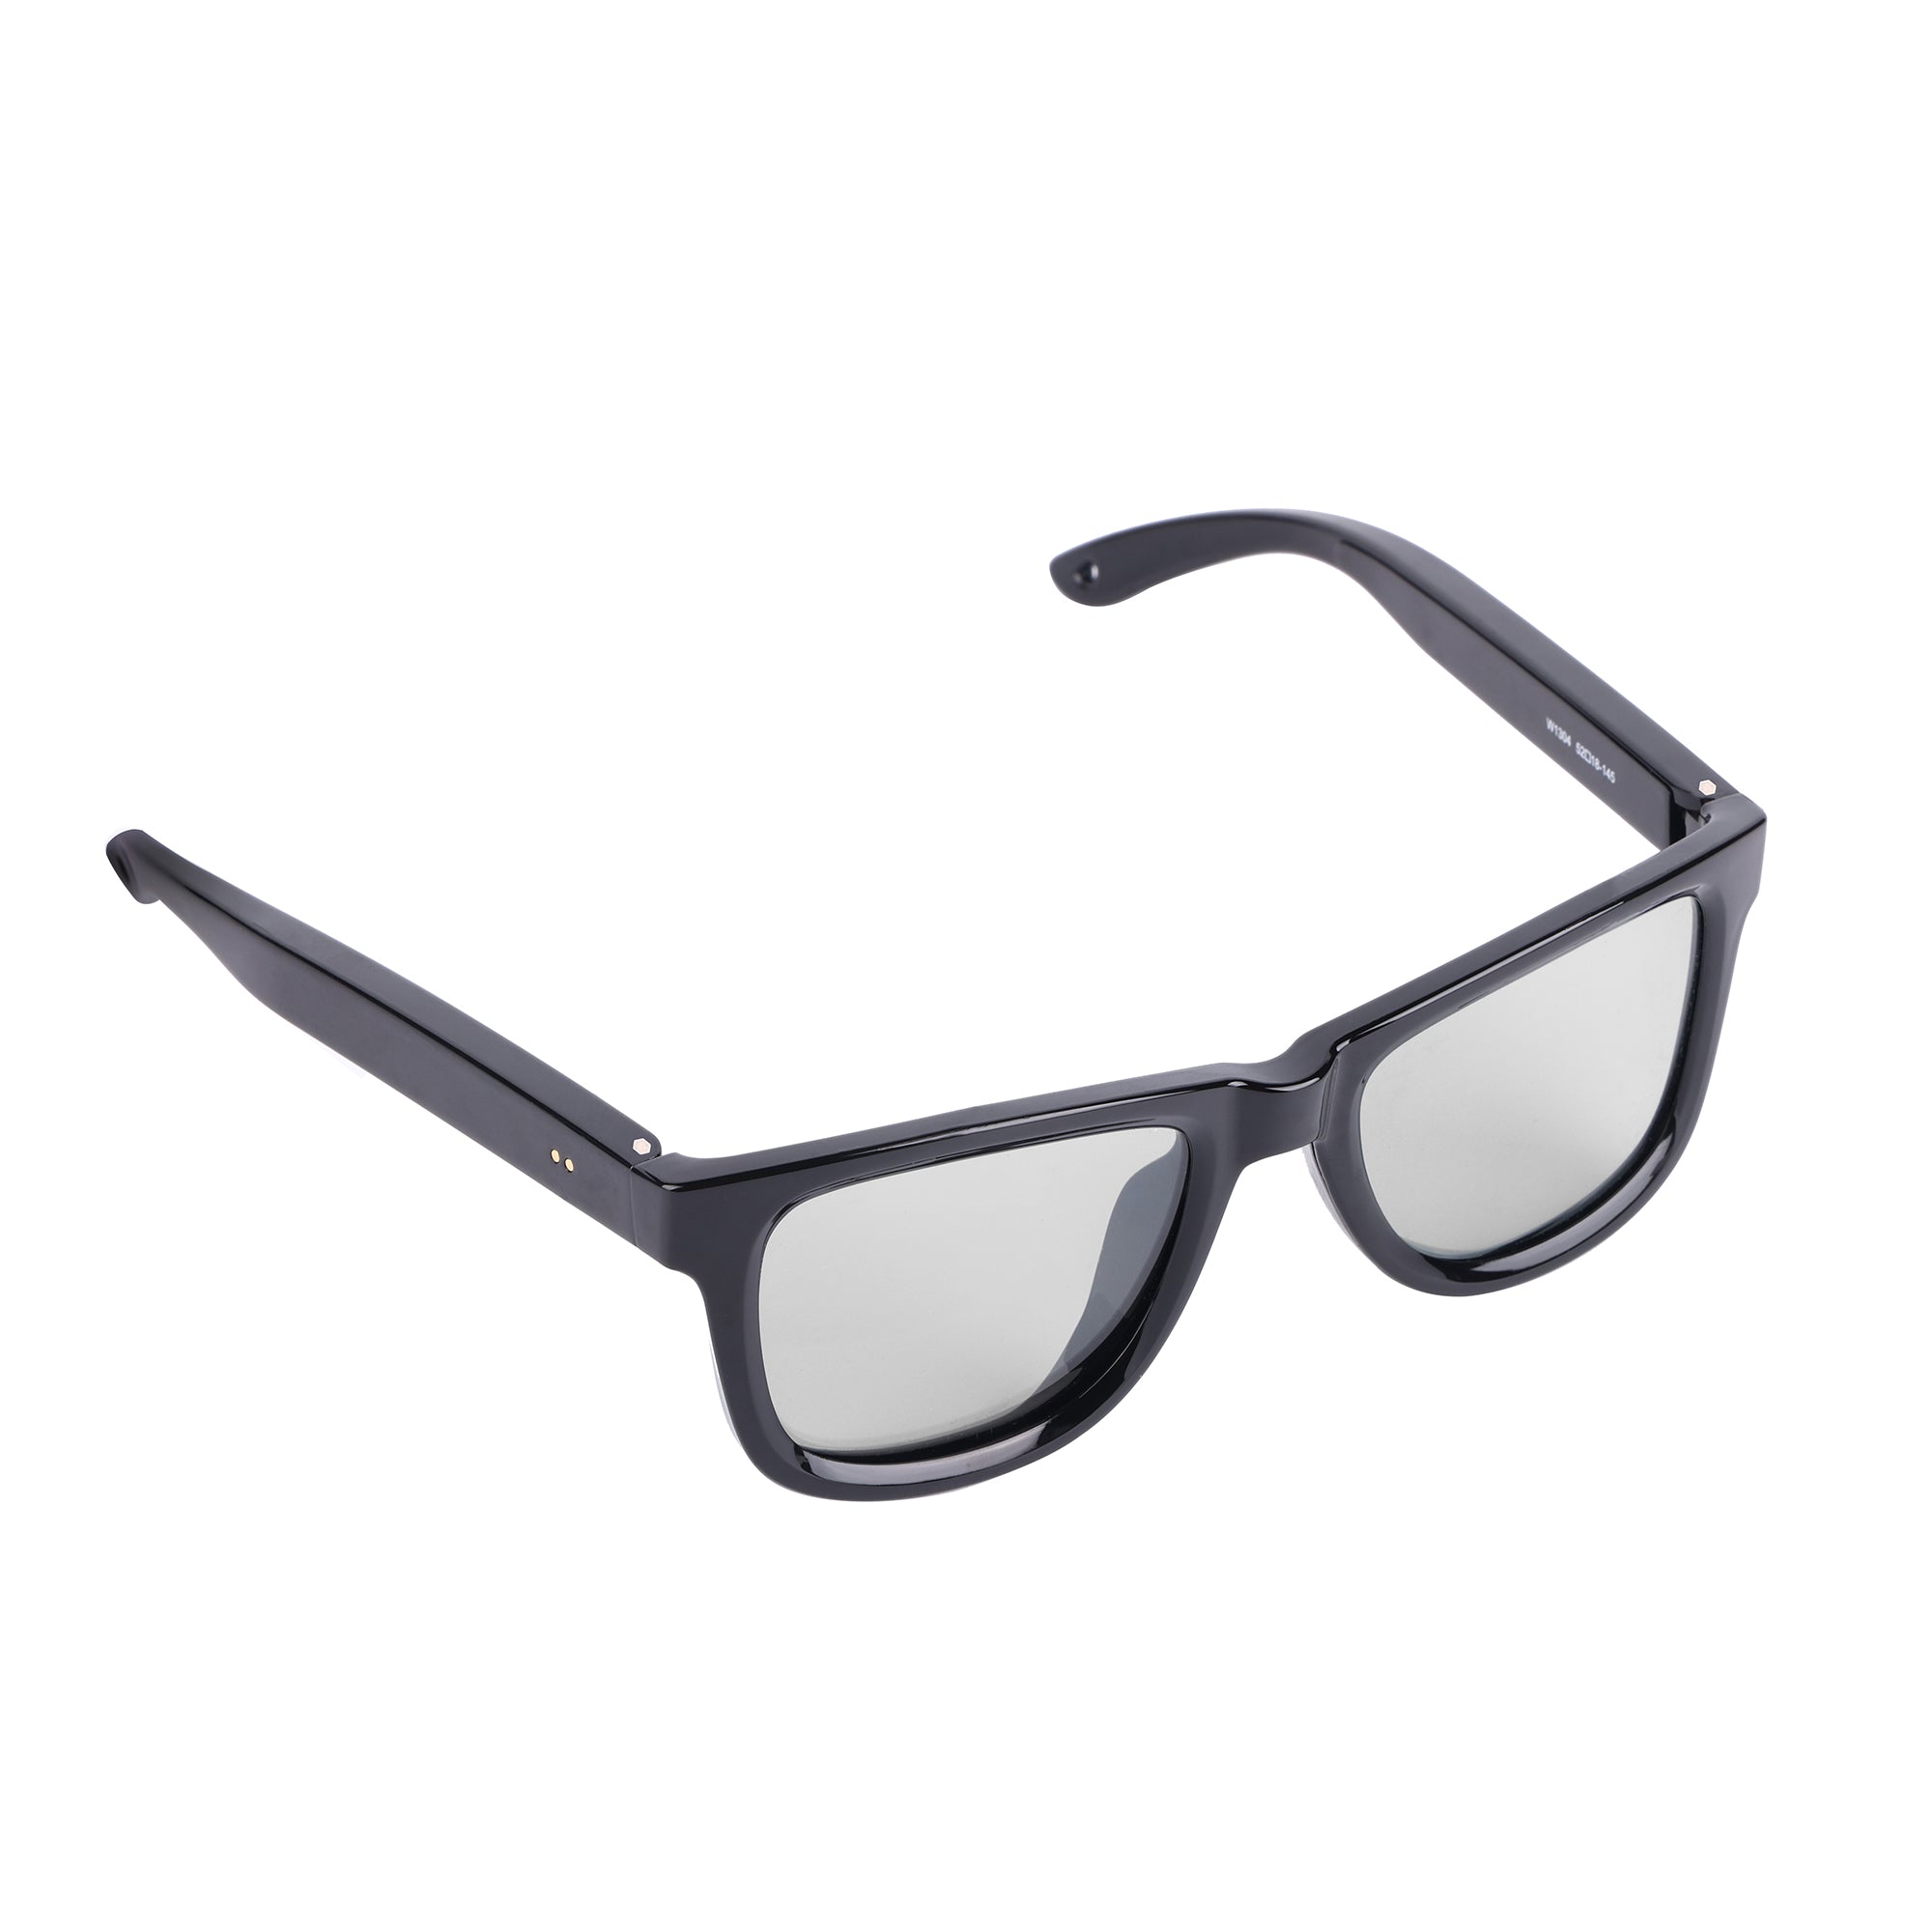 Wellermoz Smart Electrochromic Sunglasses